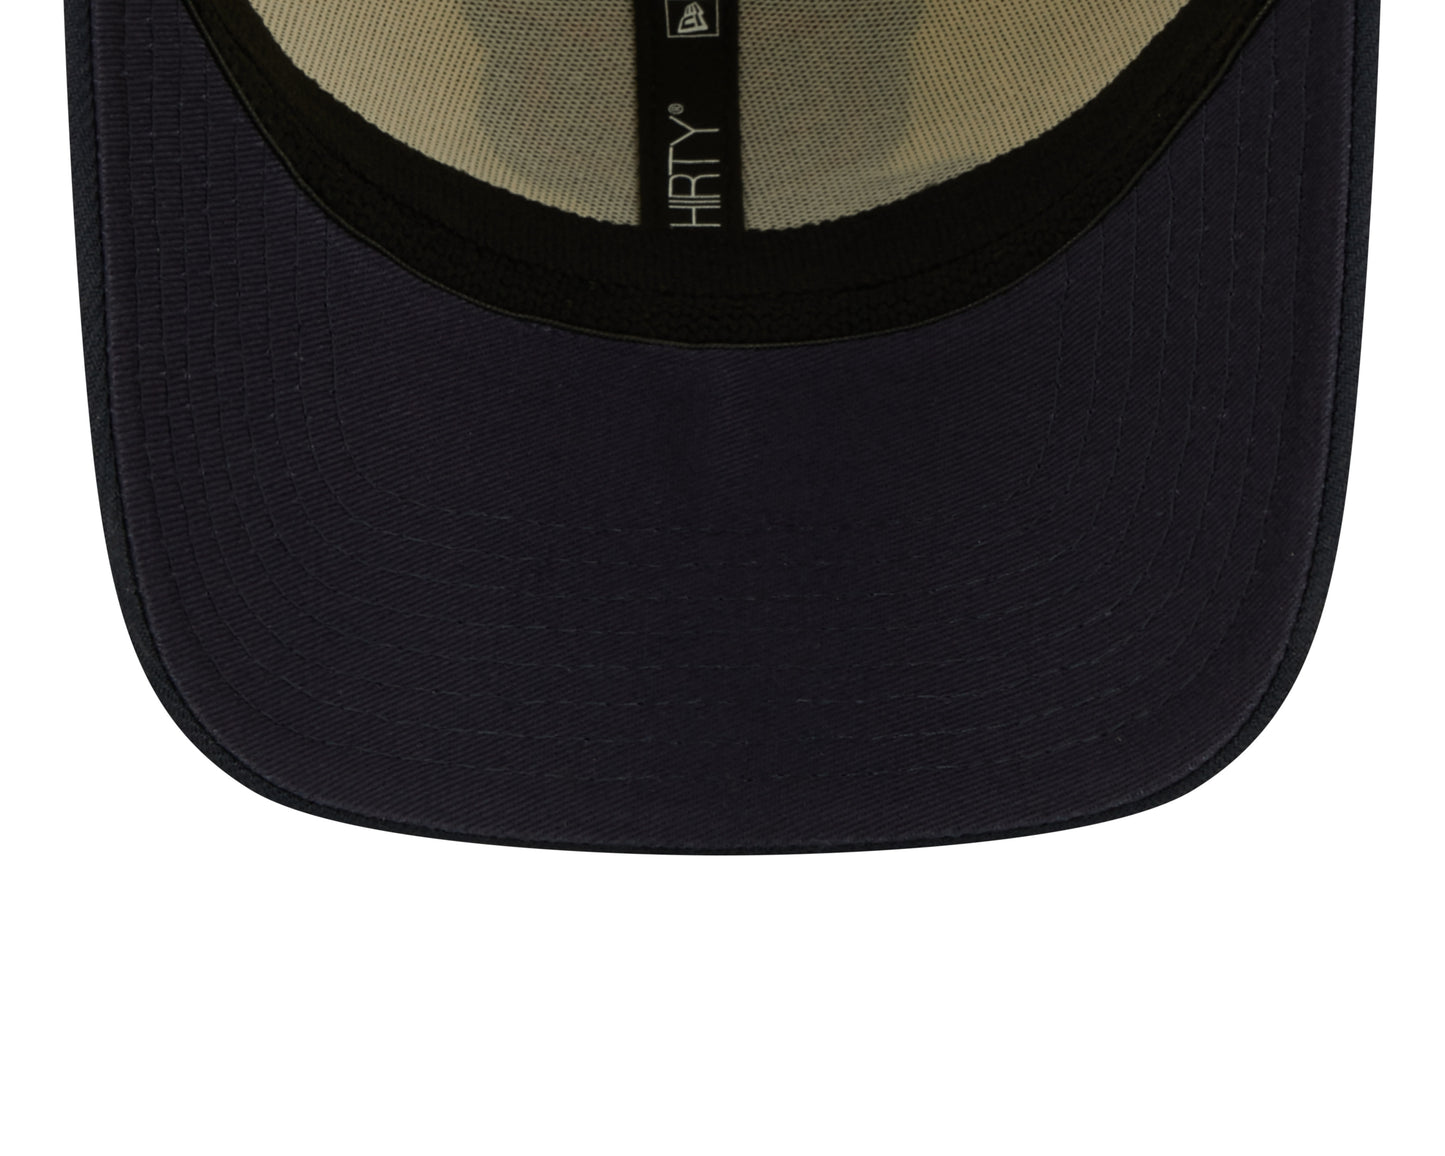 Men's Chicago Bears Mascot Logo New Era Cream/Navy 2022 Sideline 39THIRTY Flex Hat